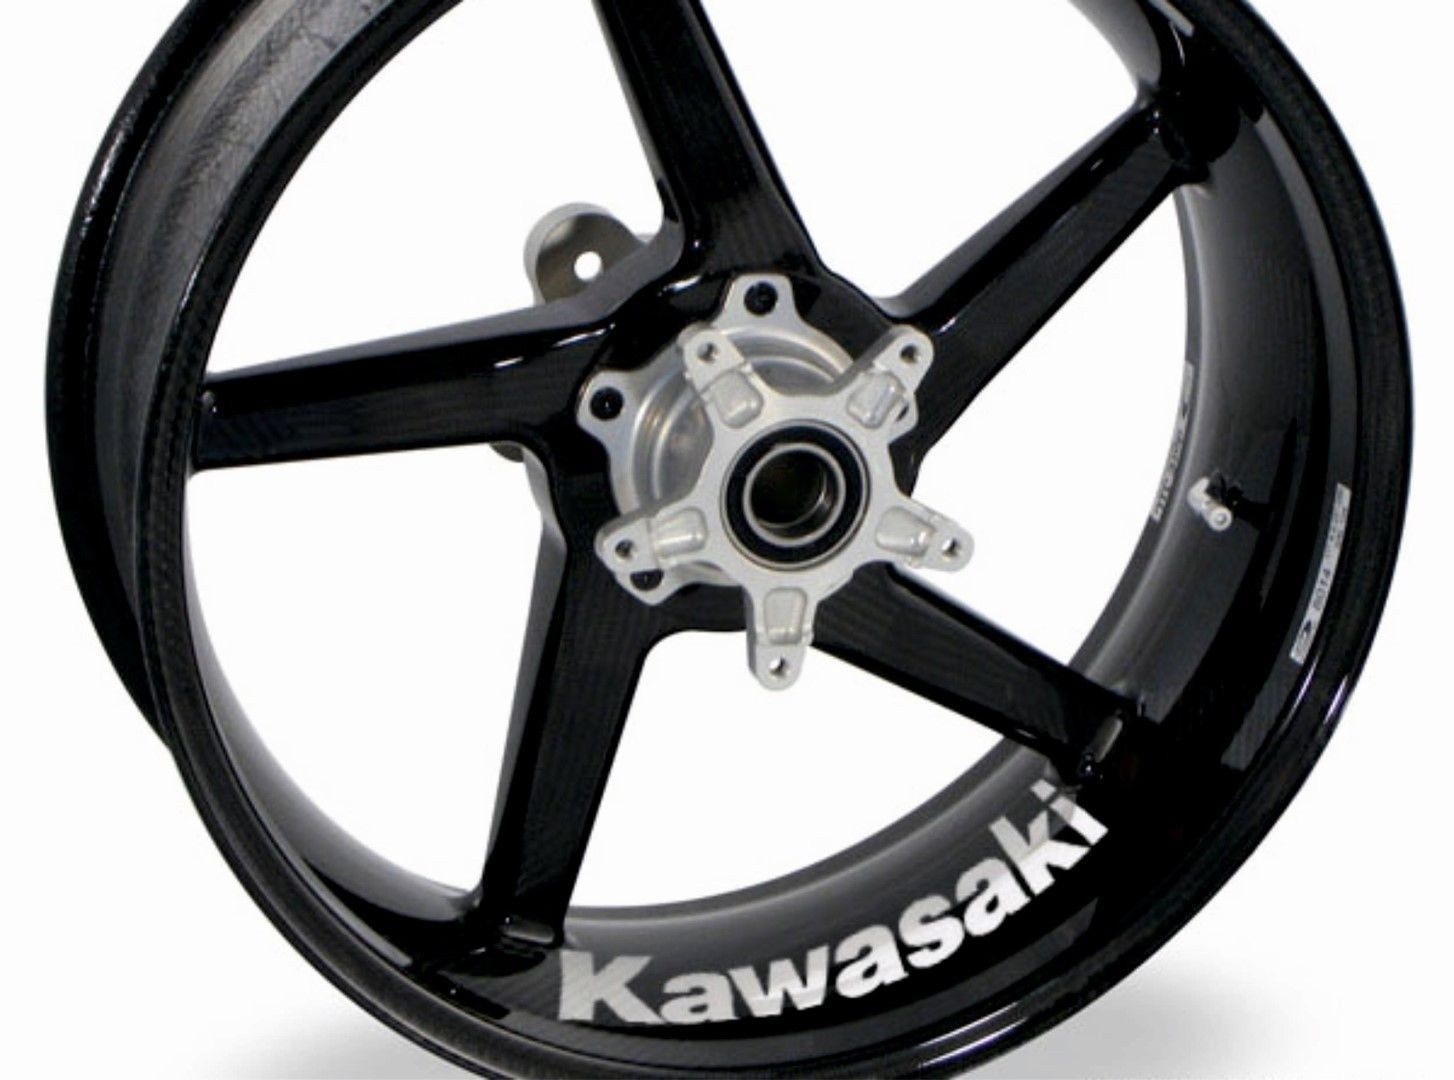 For-4x-KAWASAKI-Wheel-Rim-Sticker-Decal-Motorcycle-Vinyl